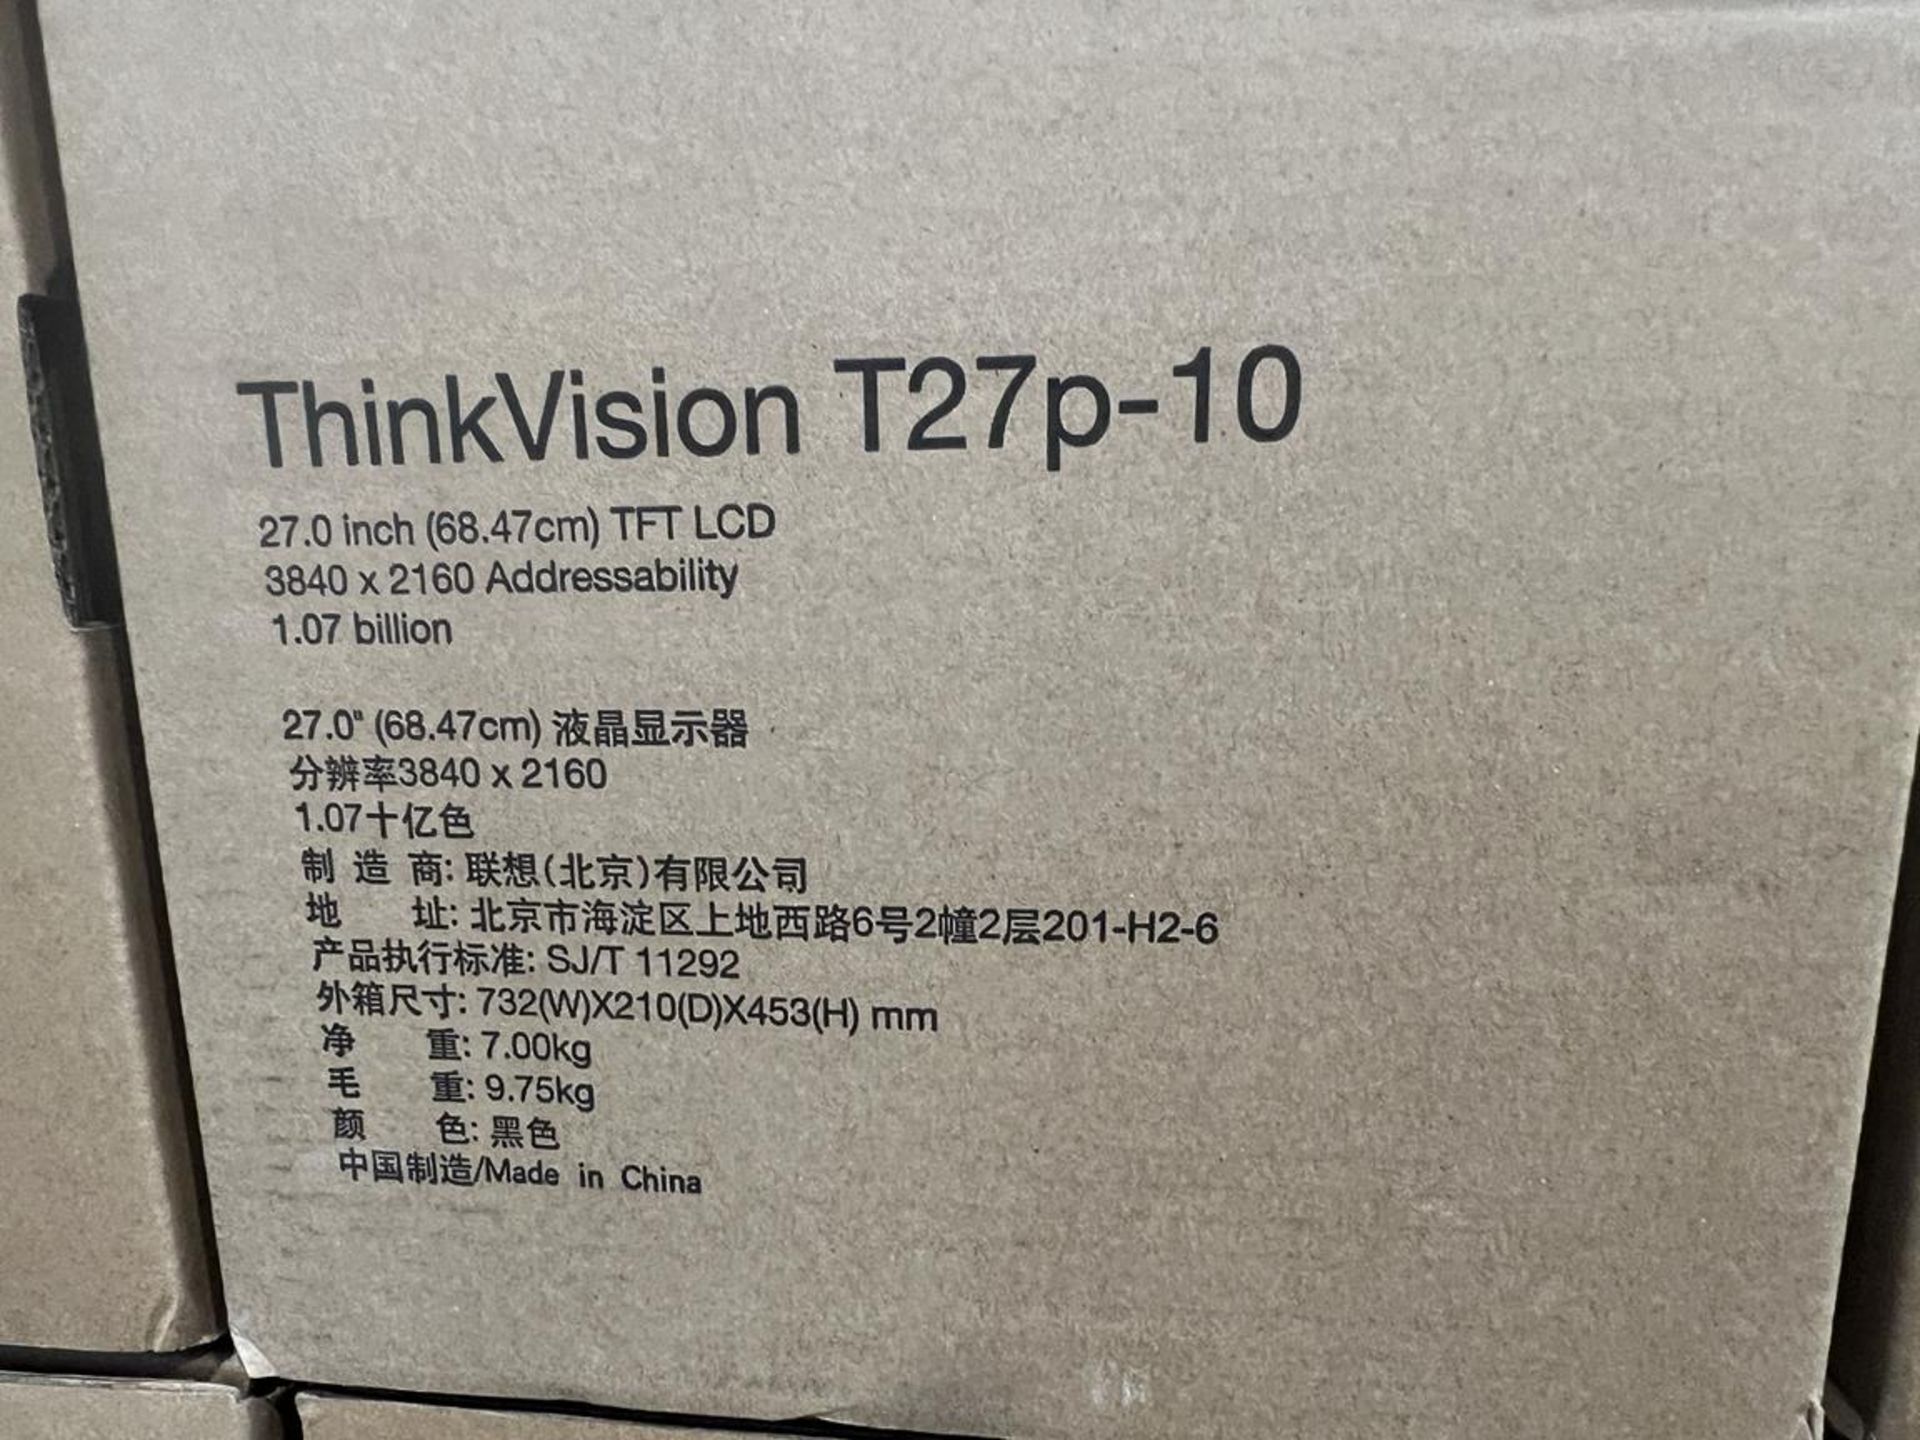 4x (no.) Lenovo, Thinkvision T27P-10 flat panel monitor (boxed) - Image 5 of 5